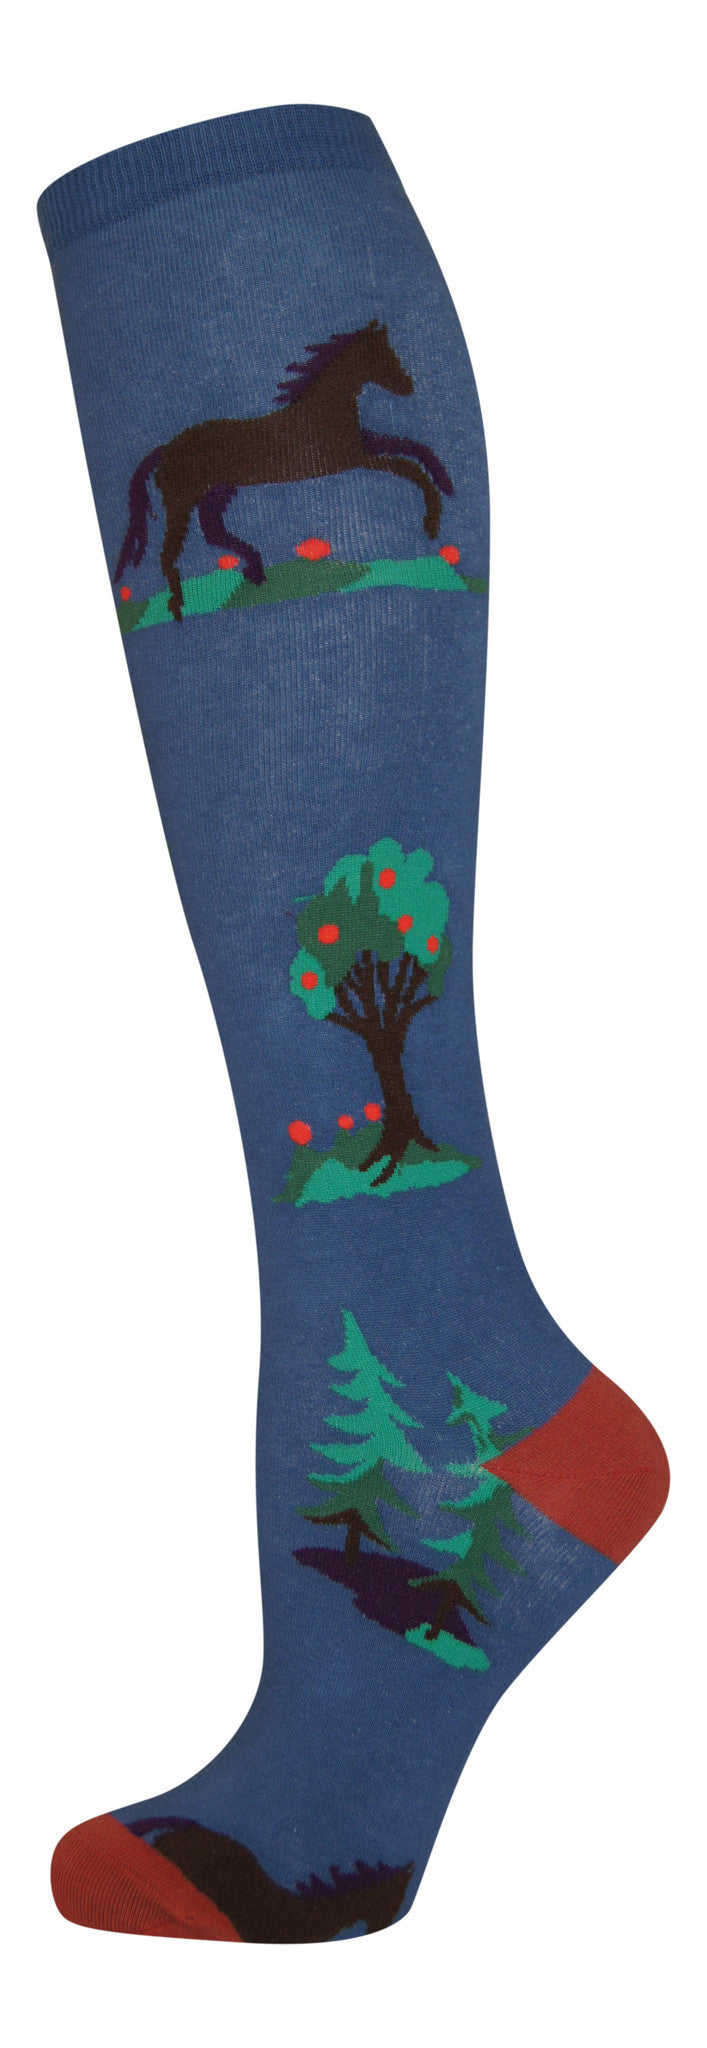 "Horses & Trees" cotton-rich knee sock from lucky7socks.com